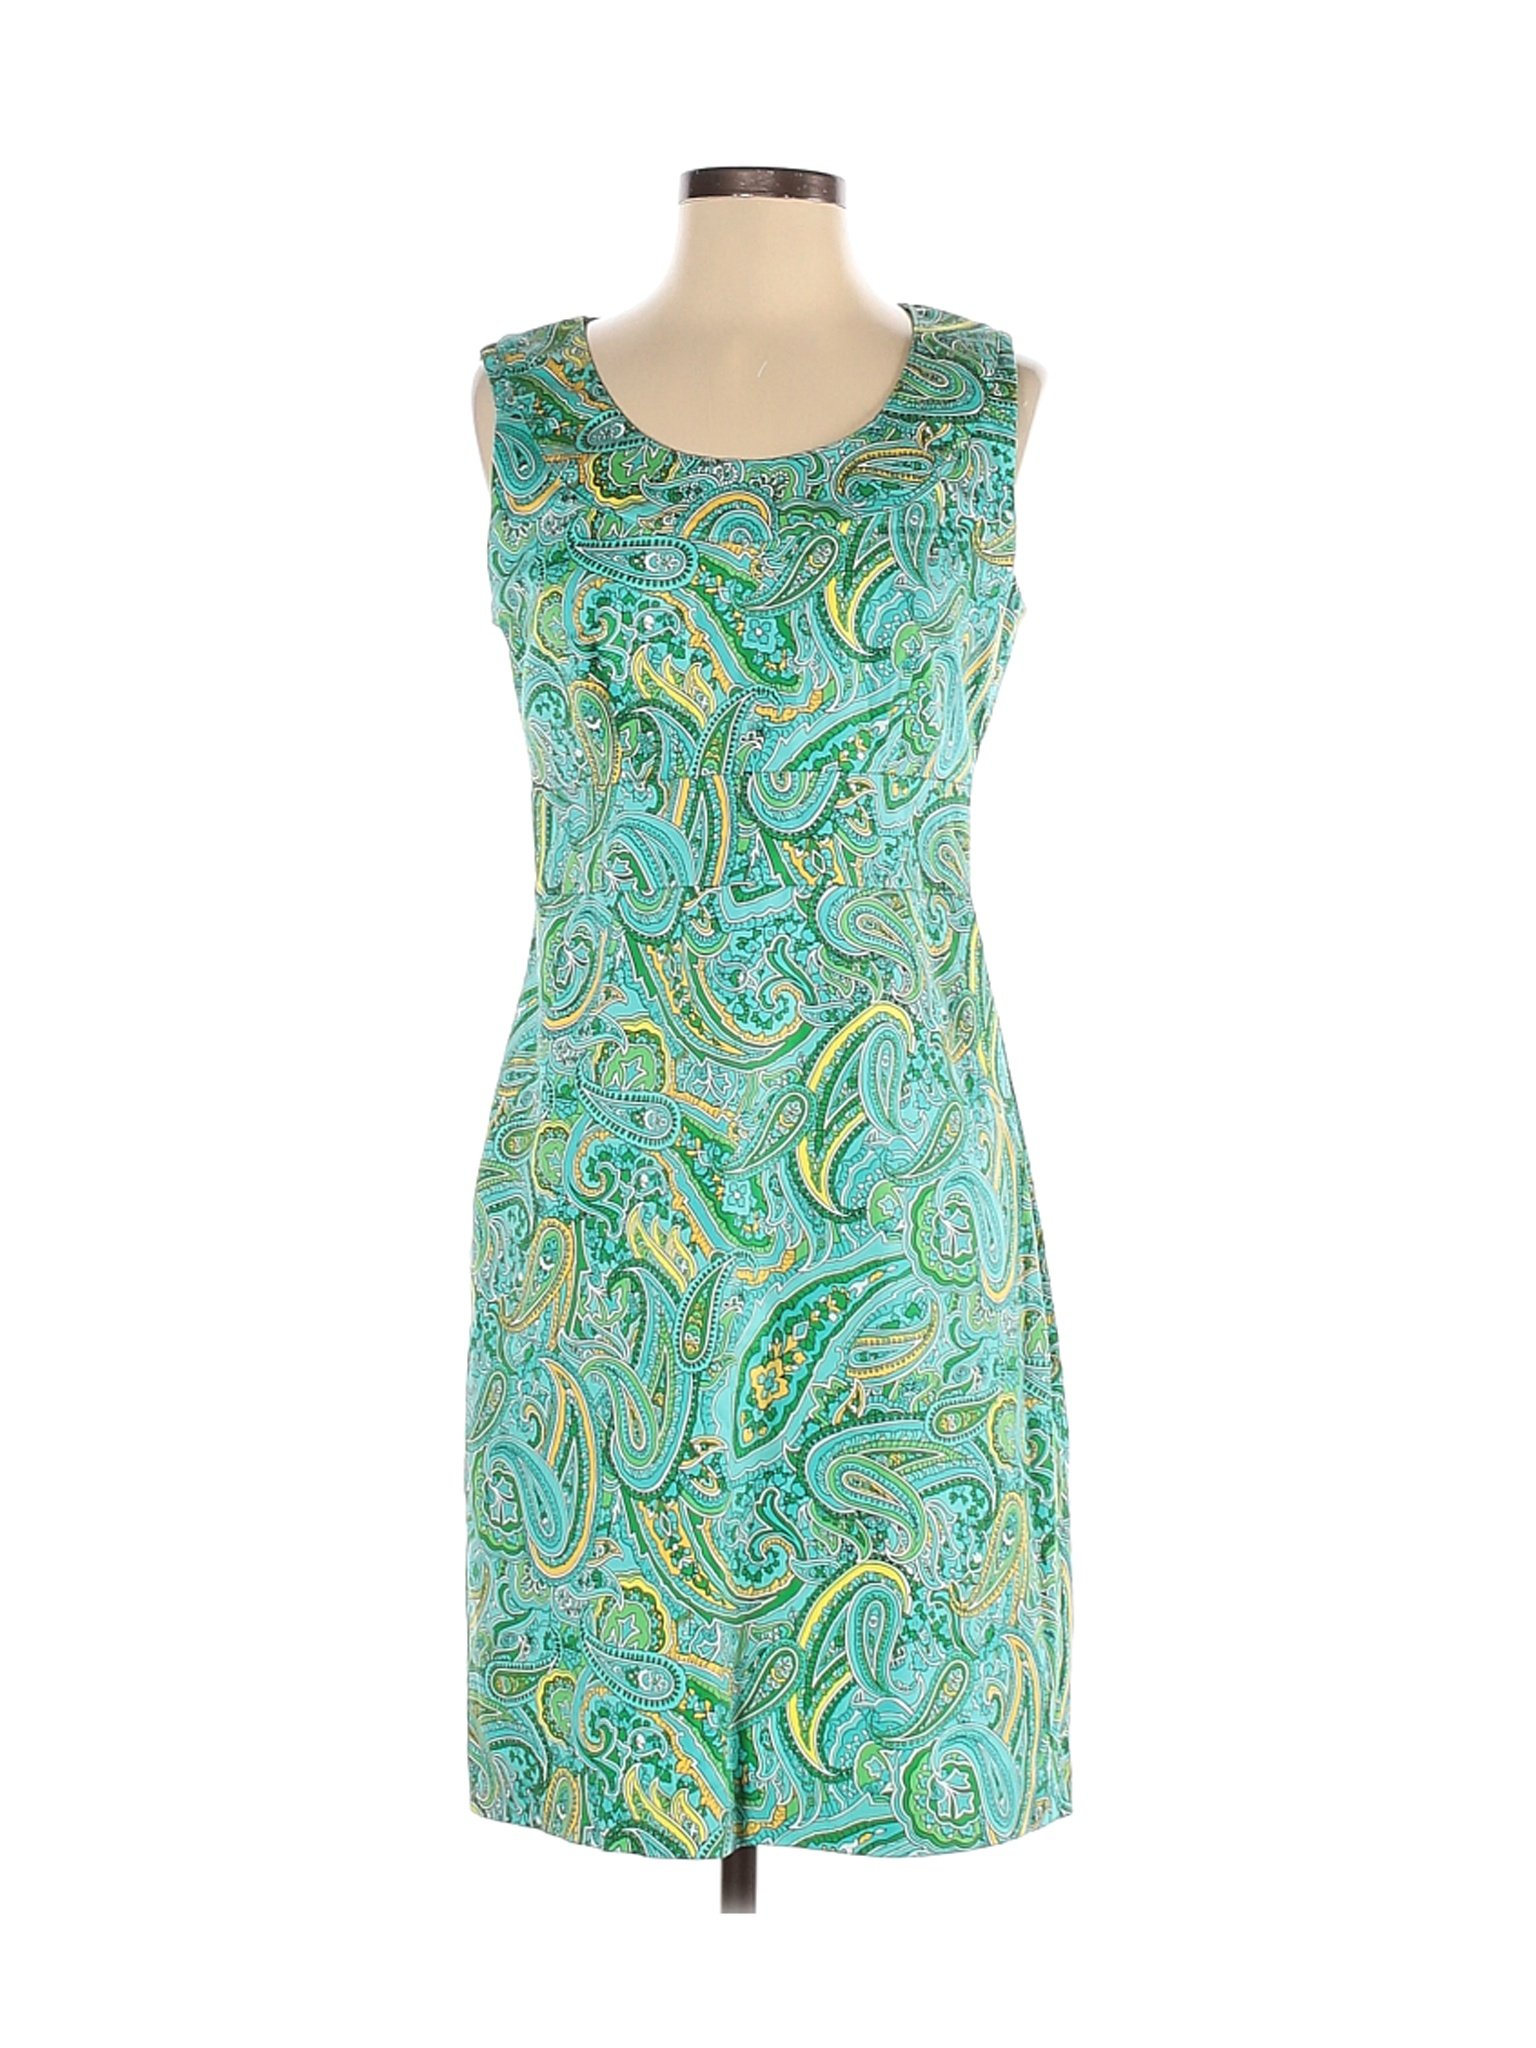 Jones New York Signature Women Blue Casual Dress 4 | eBay